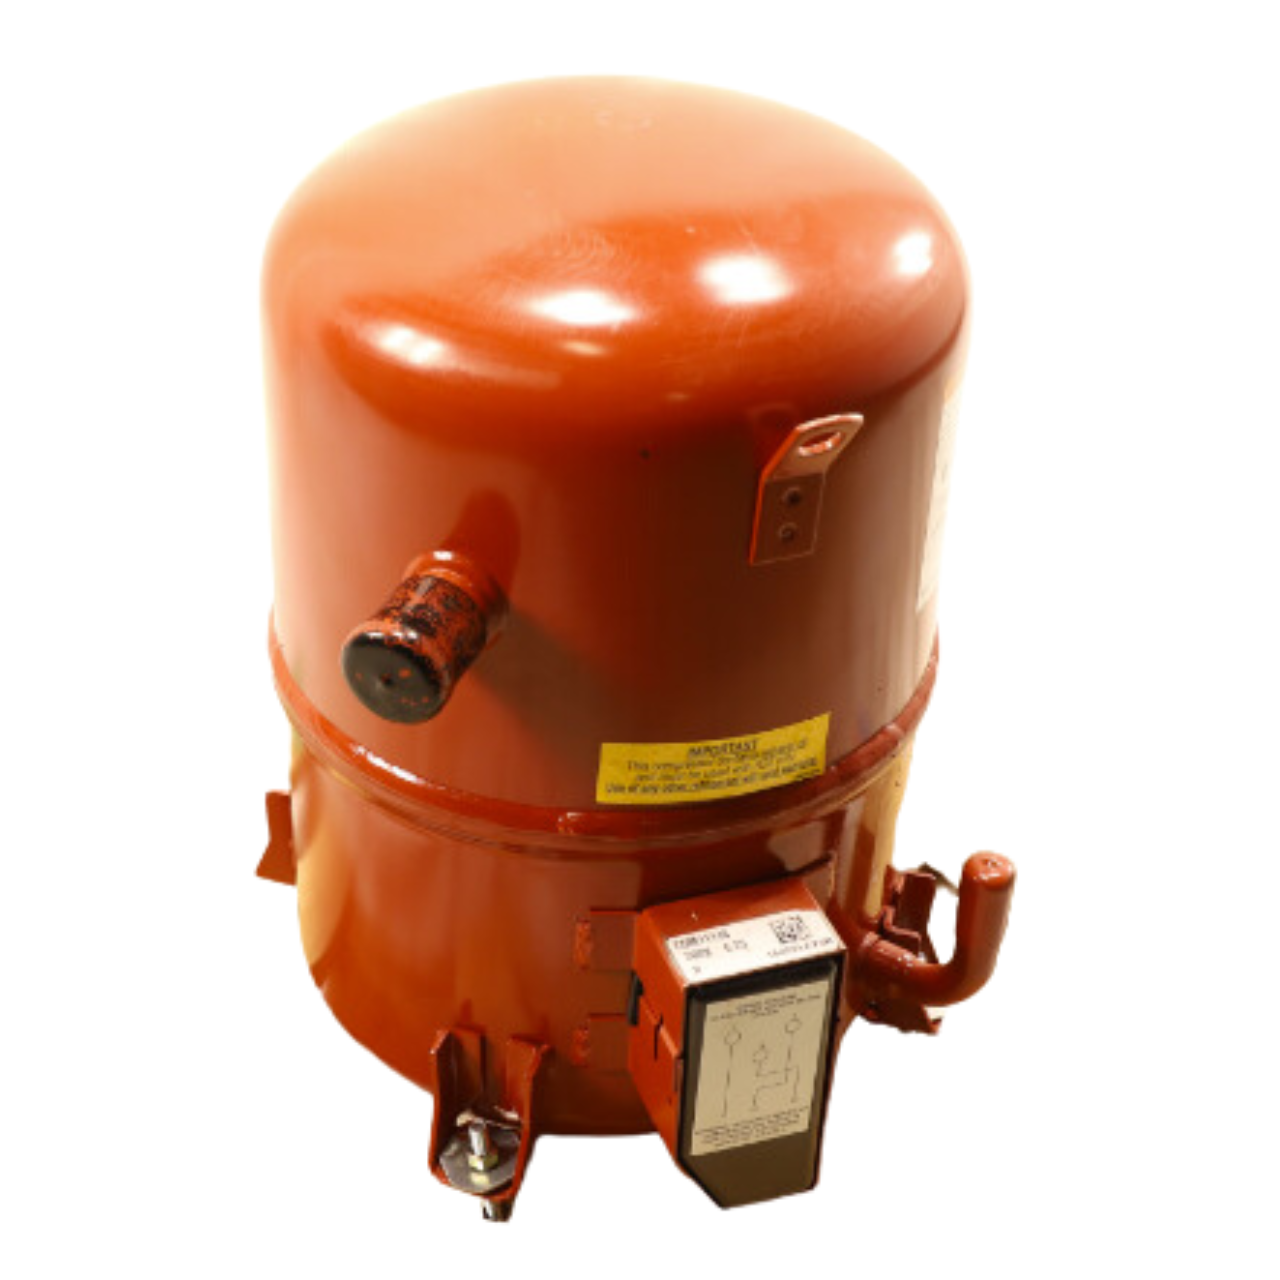 R600A Encompass Parts Frefrigerant-14oz Cylinder